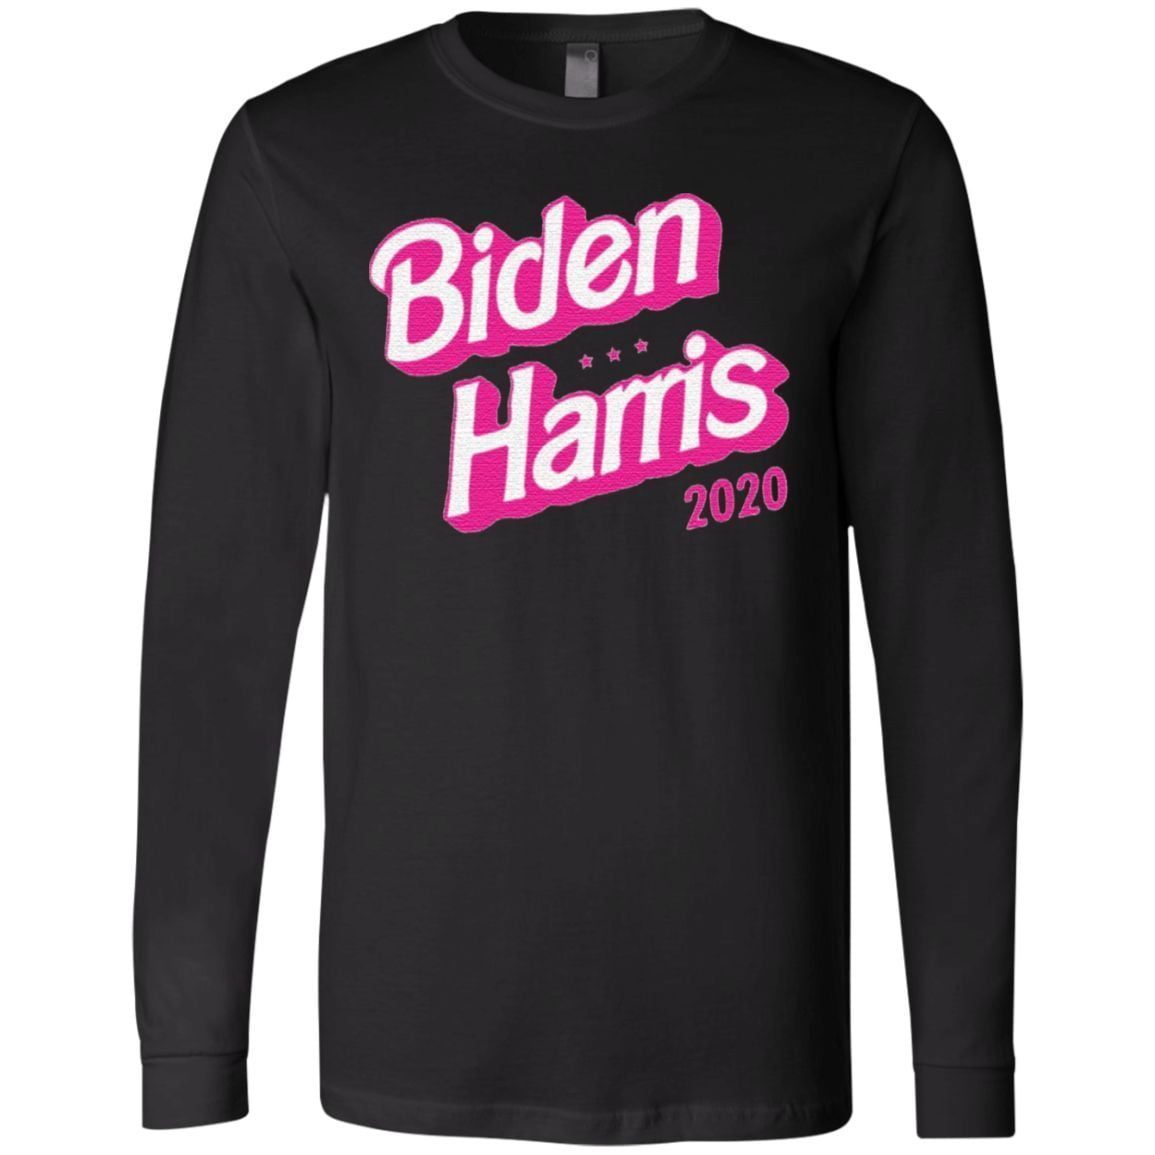 Biden Harris 2020 USA TShirt